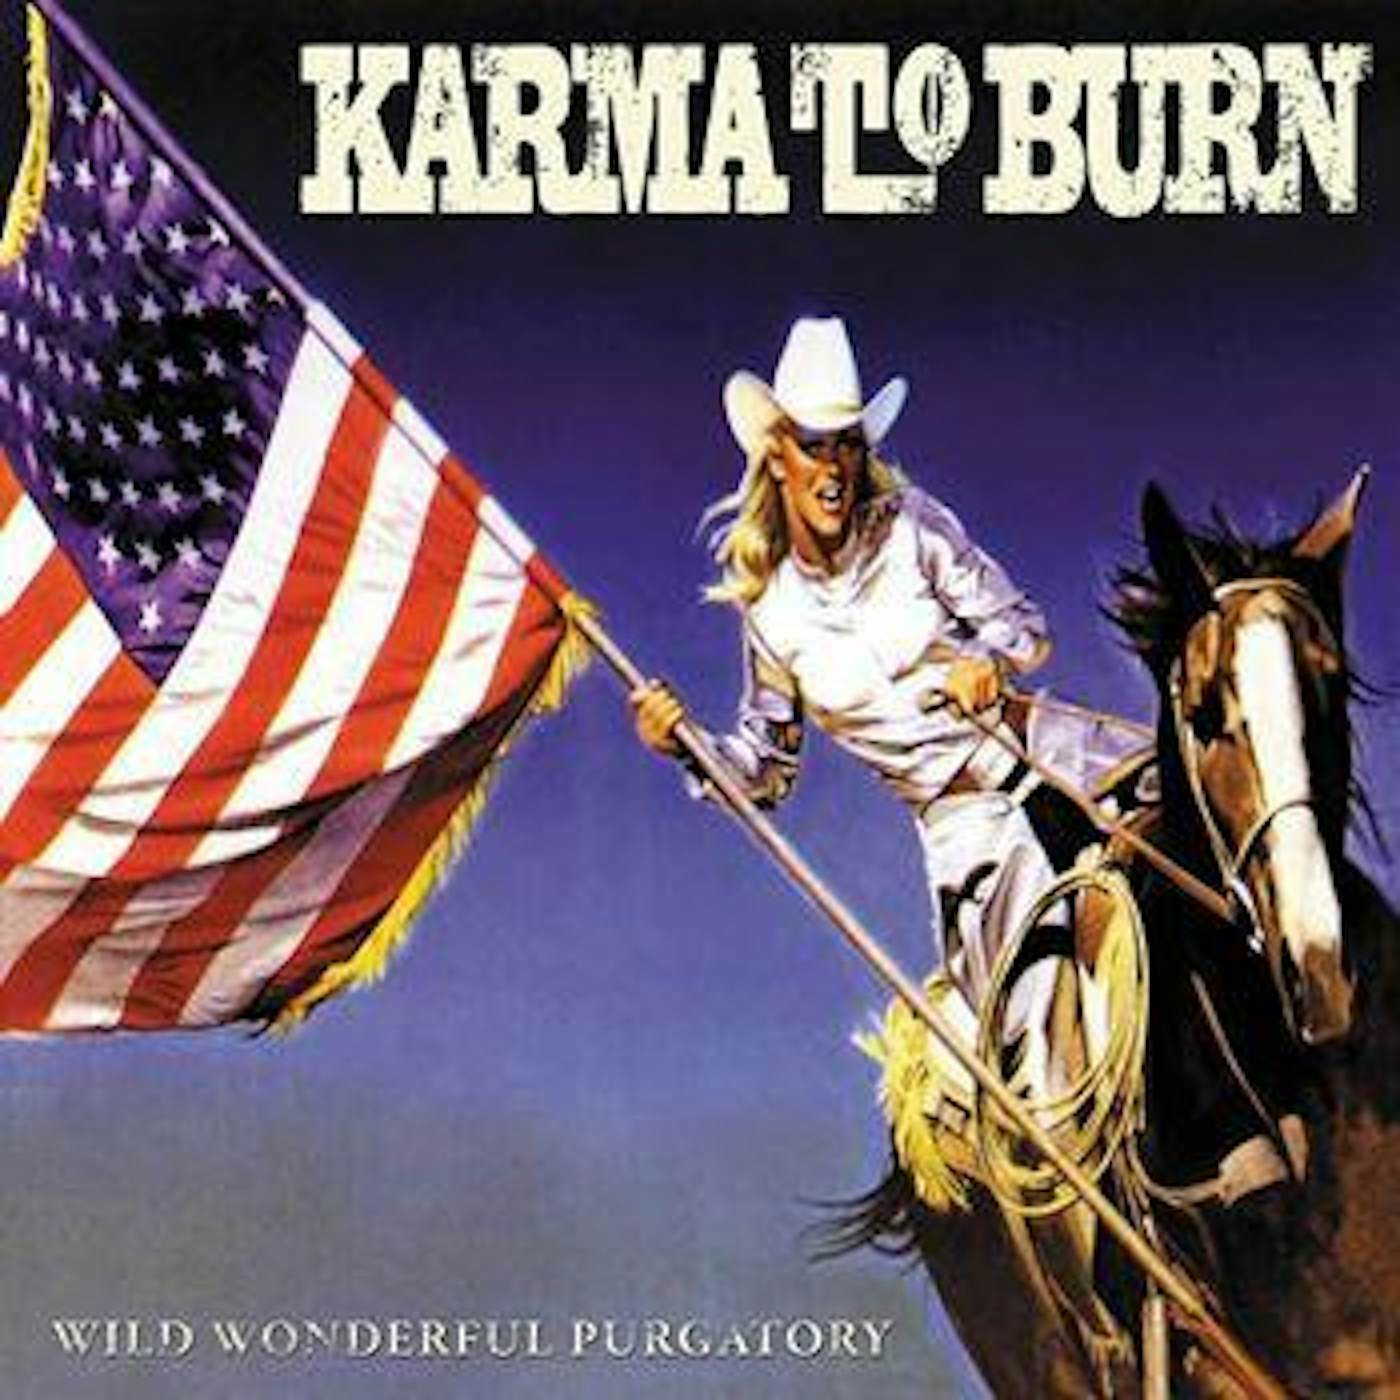 Karma To Burn WILD WONDERFUL PURGATORY CD